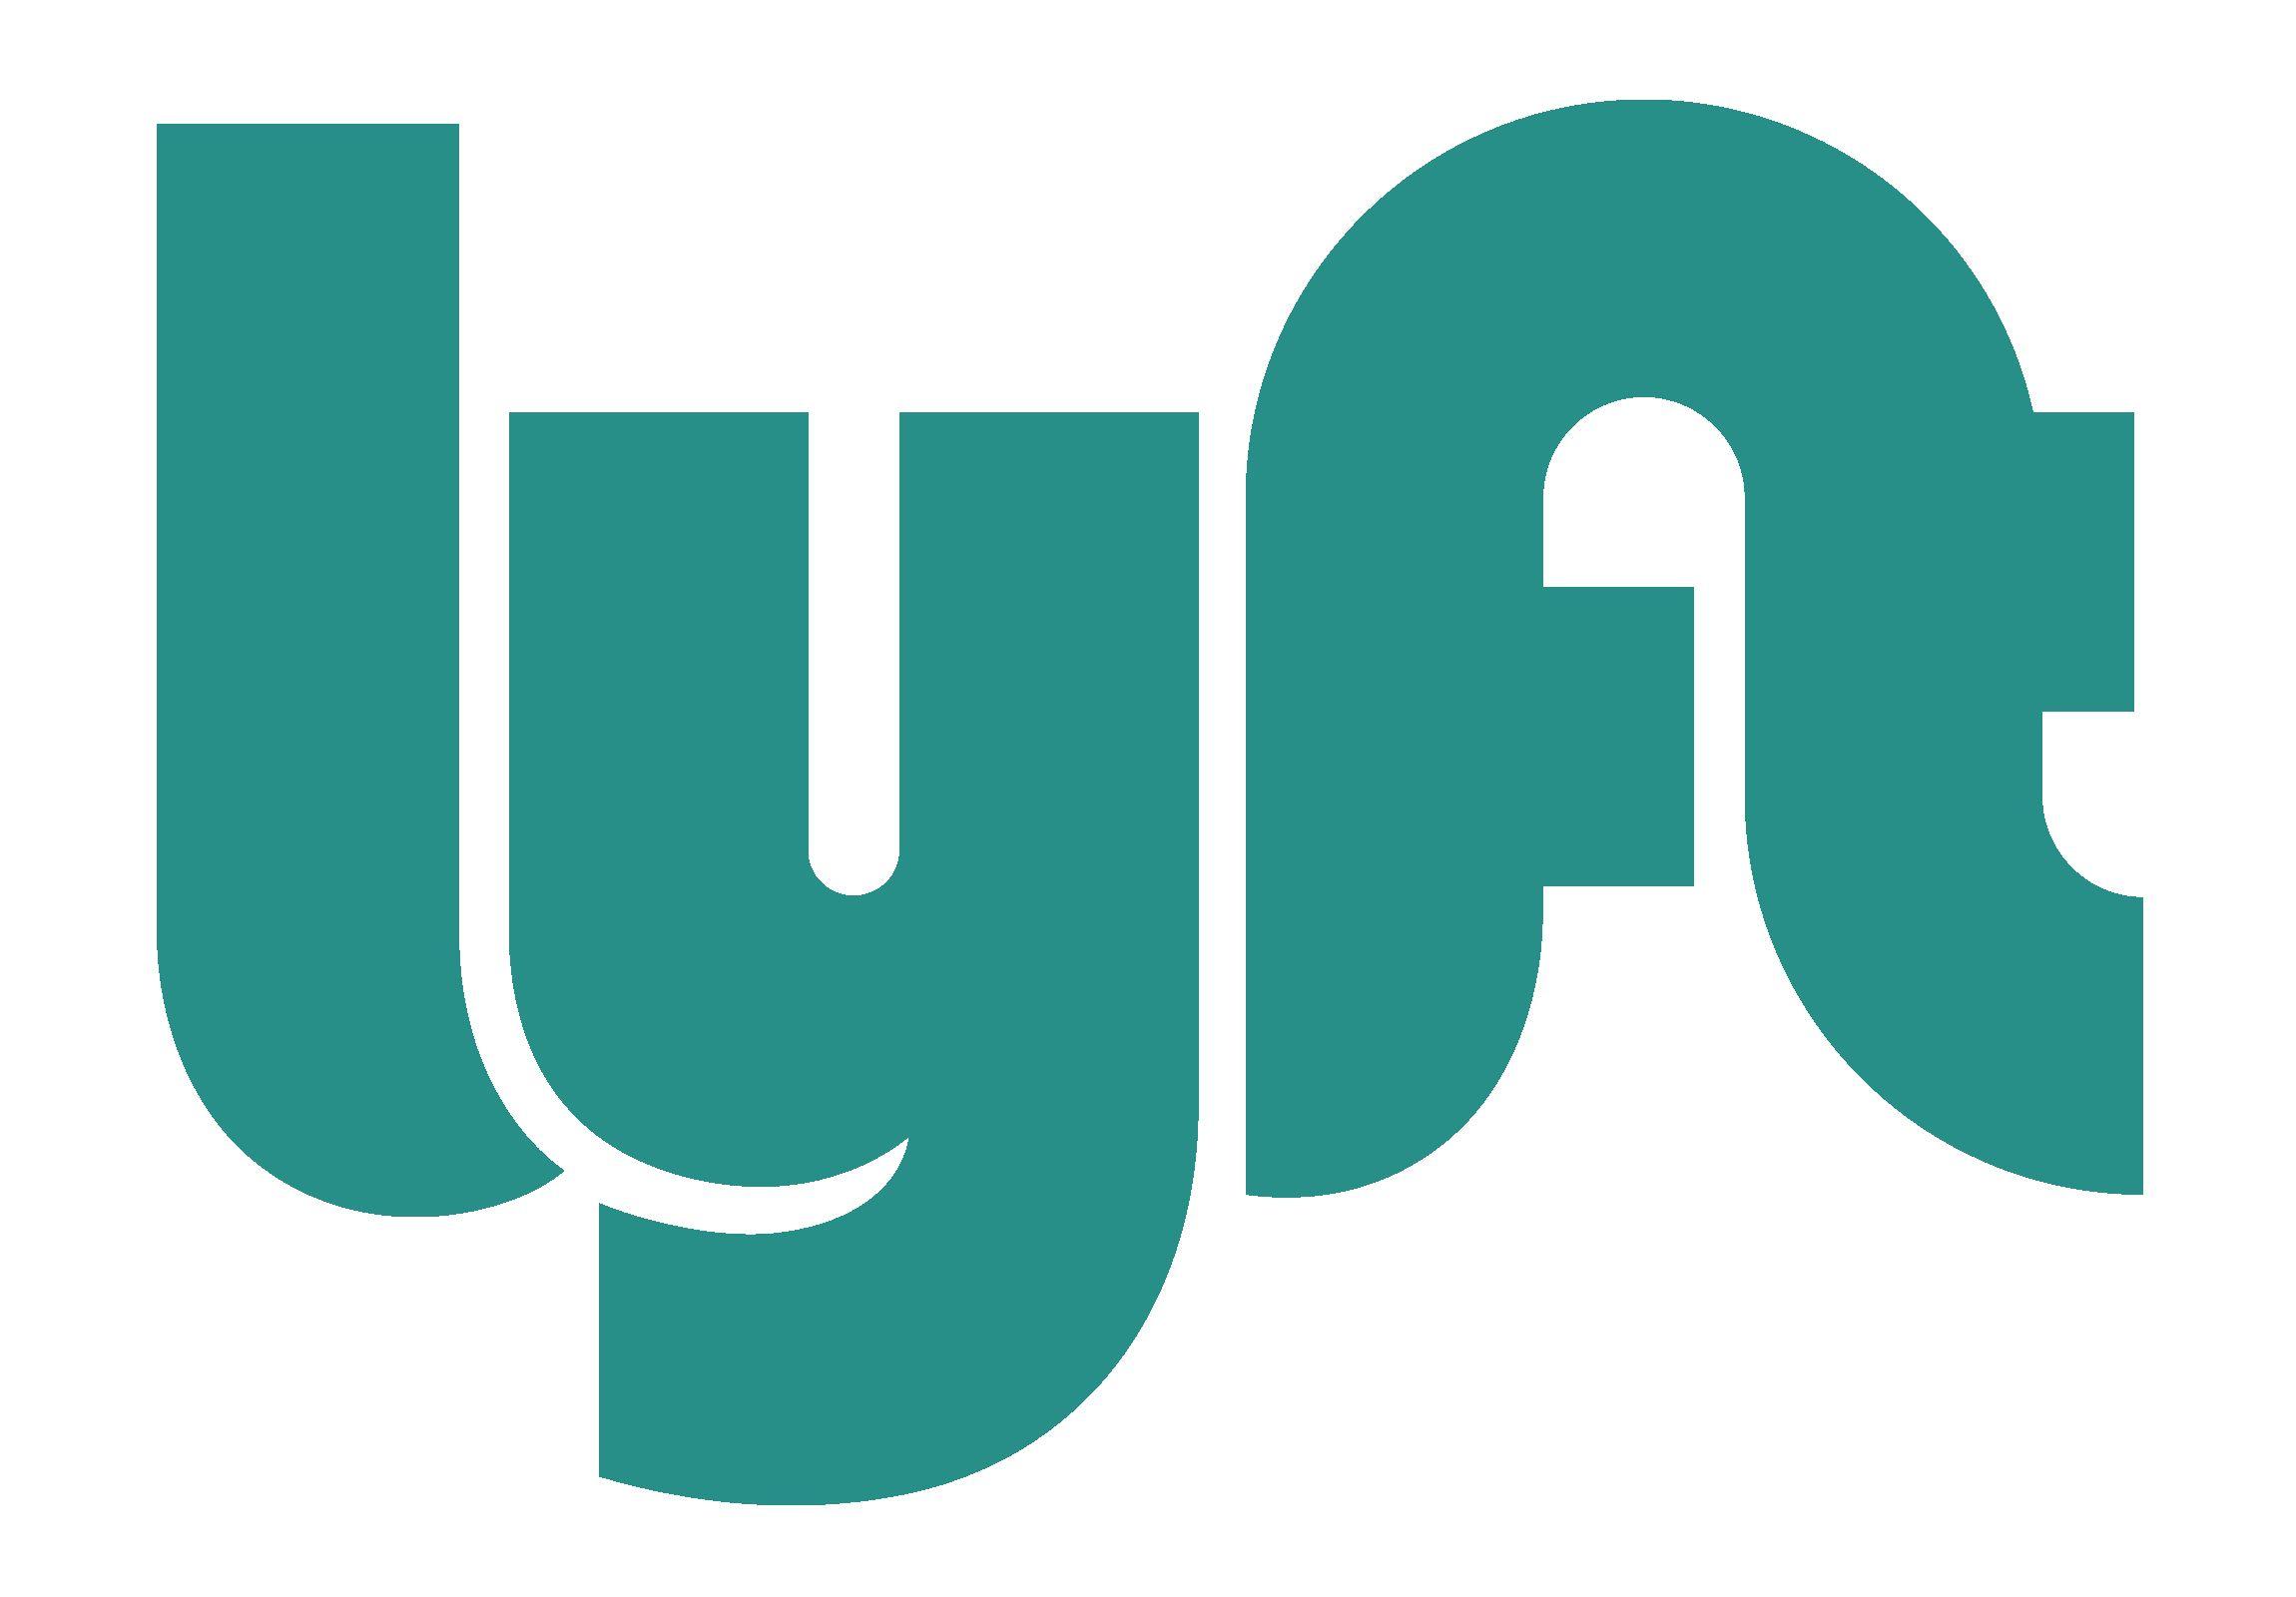 Pink Lyft Logo - Lyft Logo, Lyft Symbol, Meaning, History and Evolution